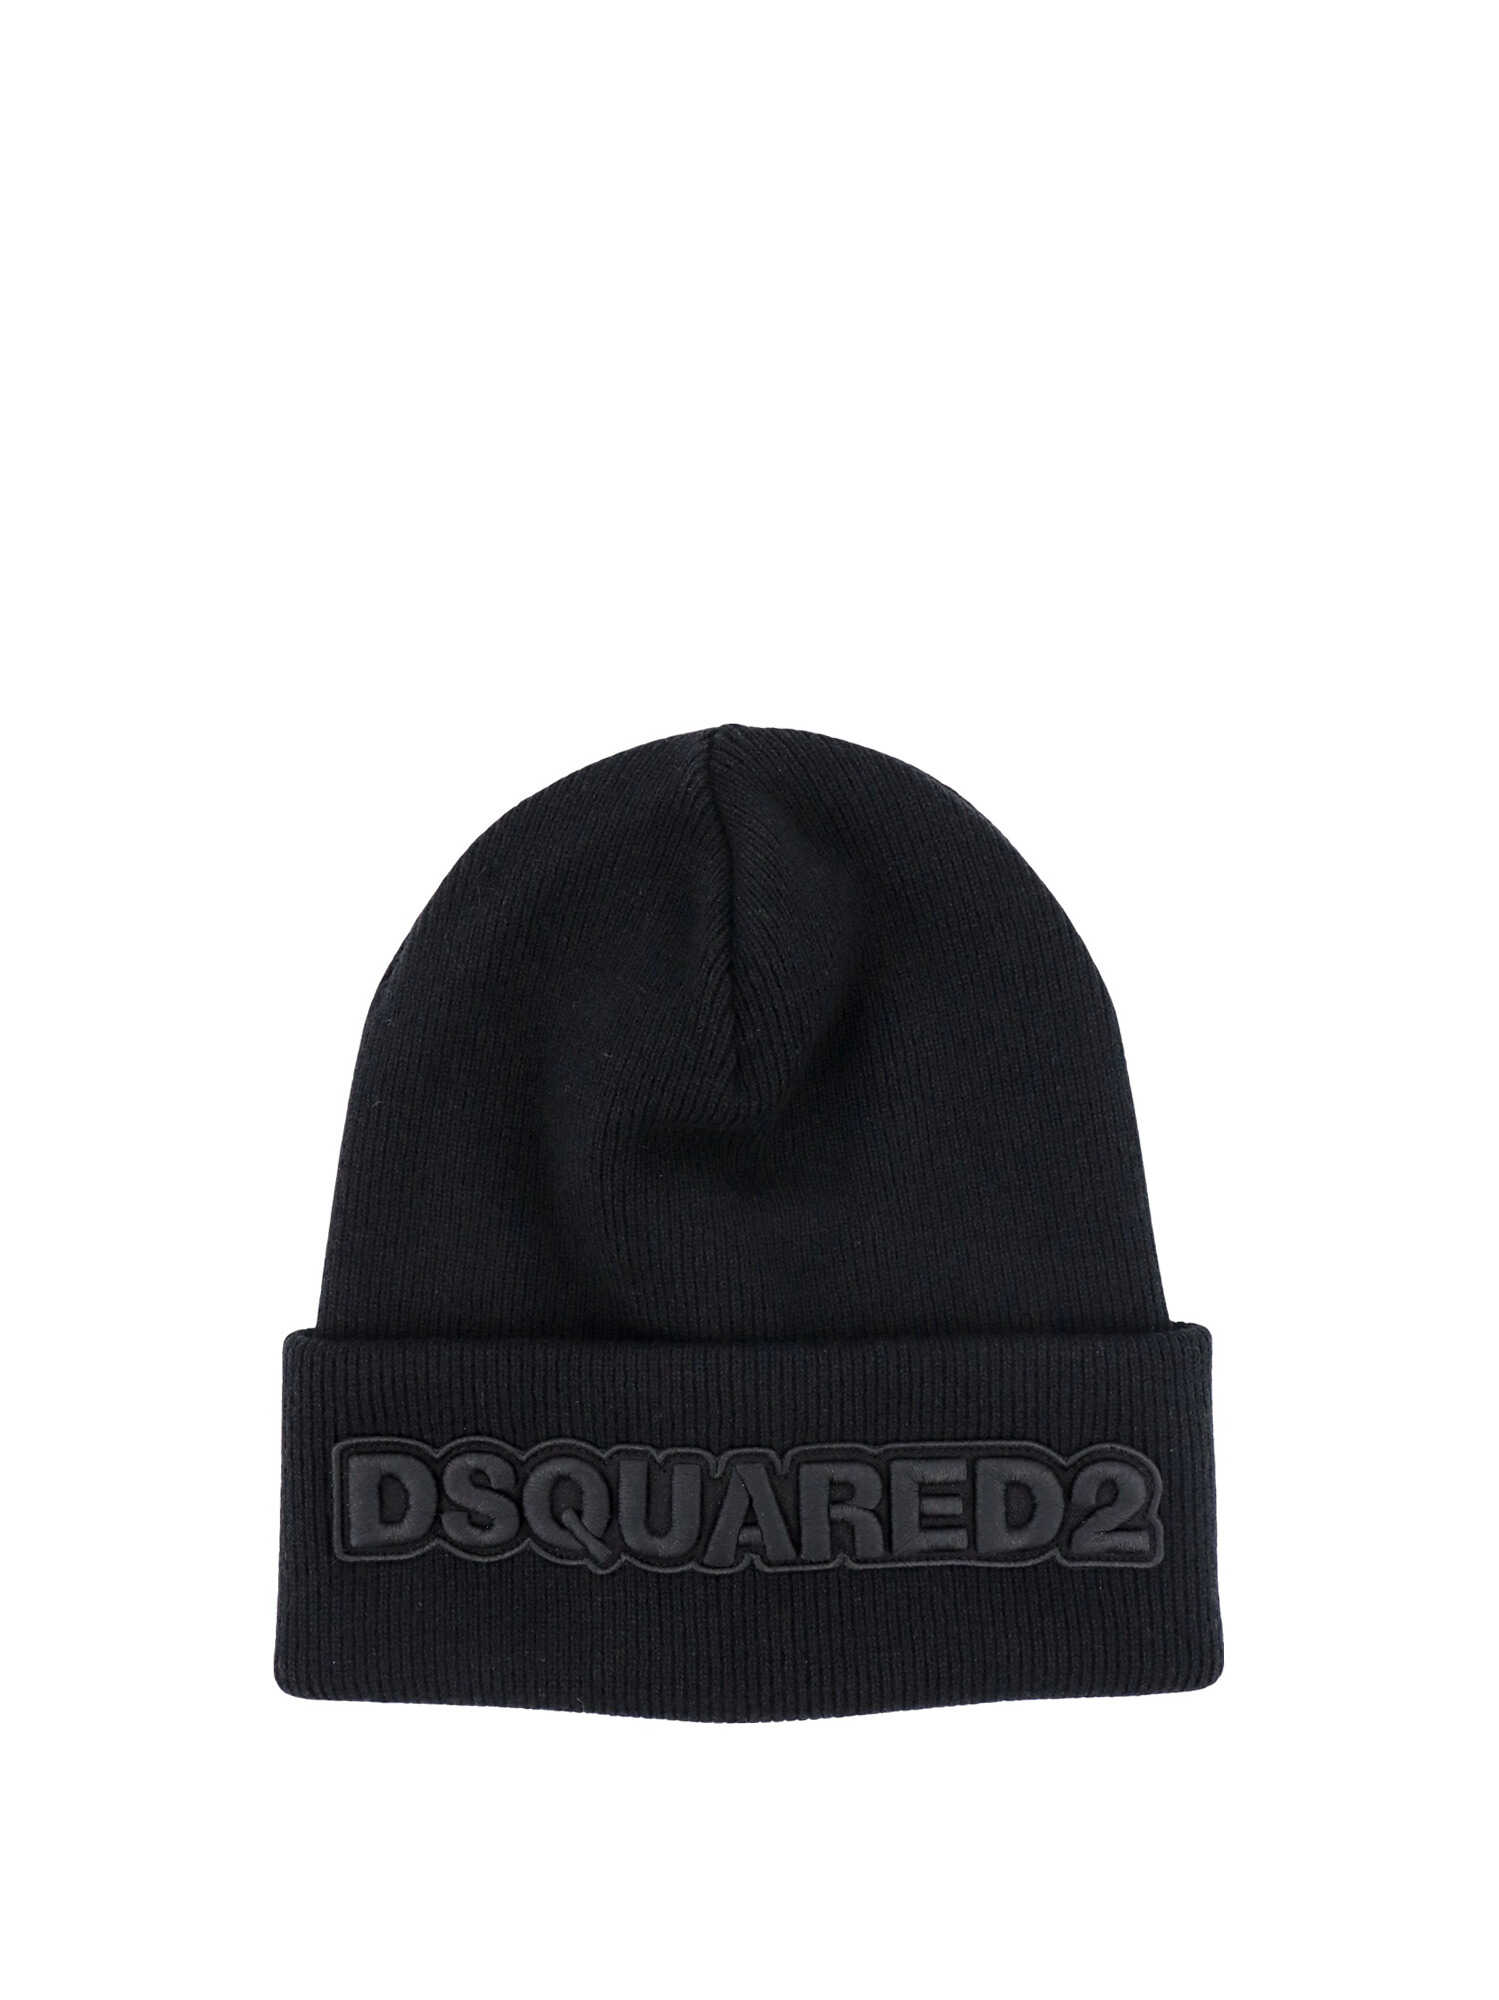 DSQUARED2 Dsquared2 Hats Black Black